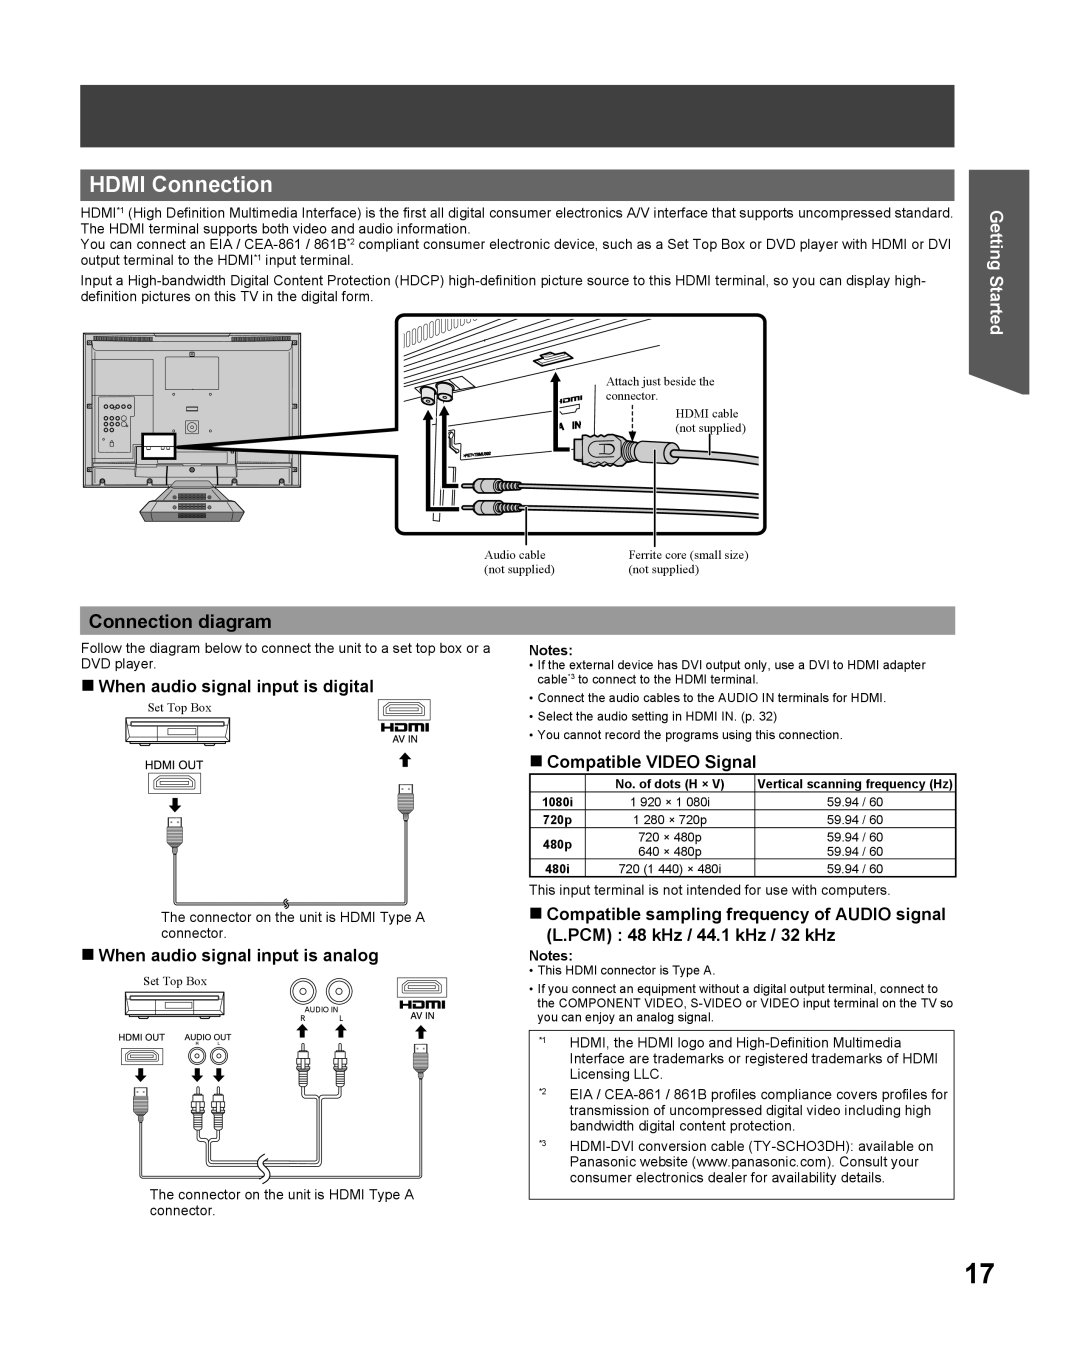 Panasonic TC 22LR30 manual HDMI Connection, Connection diagram, When audio signal input is digital, Compatible VIDEO Signal 